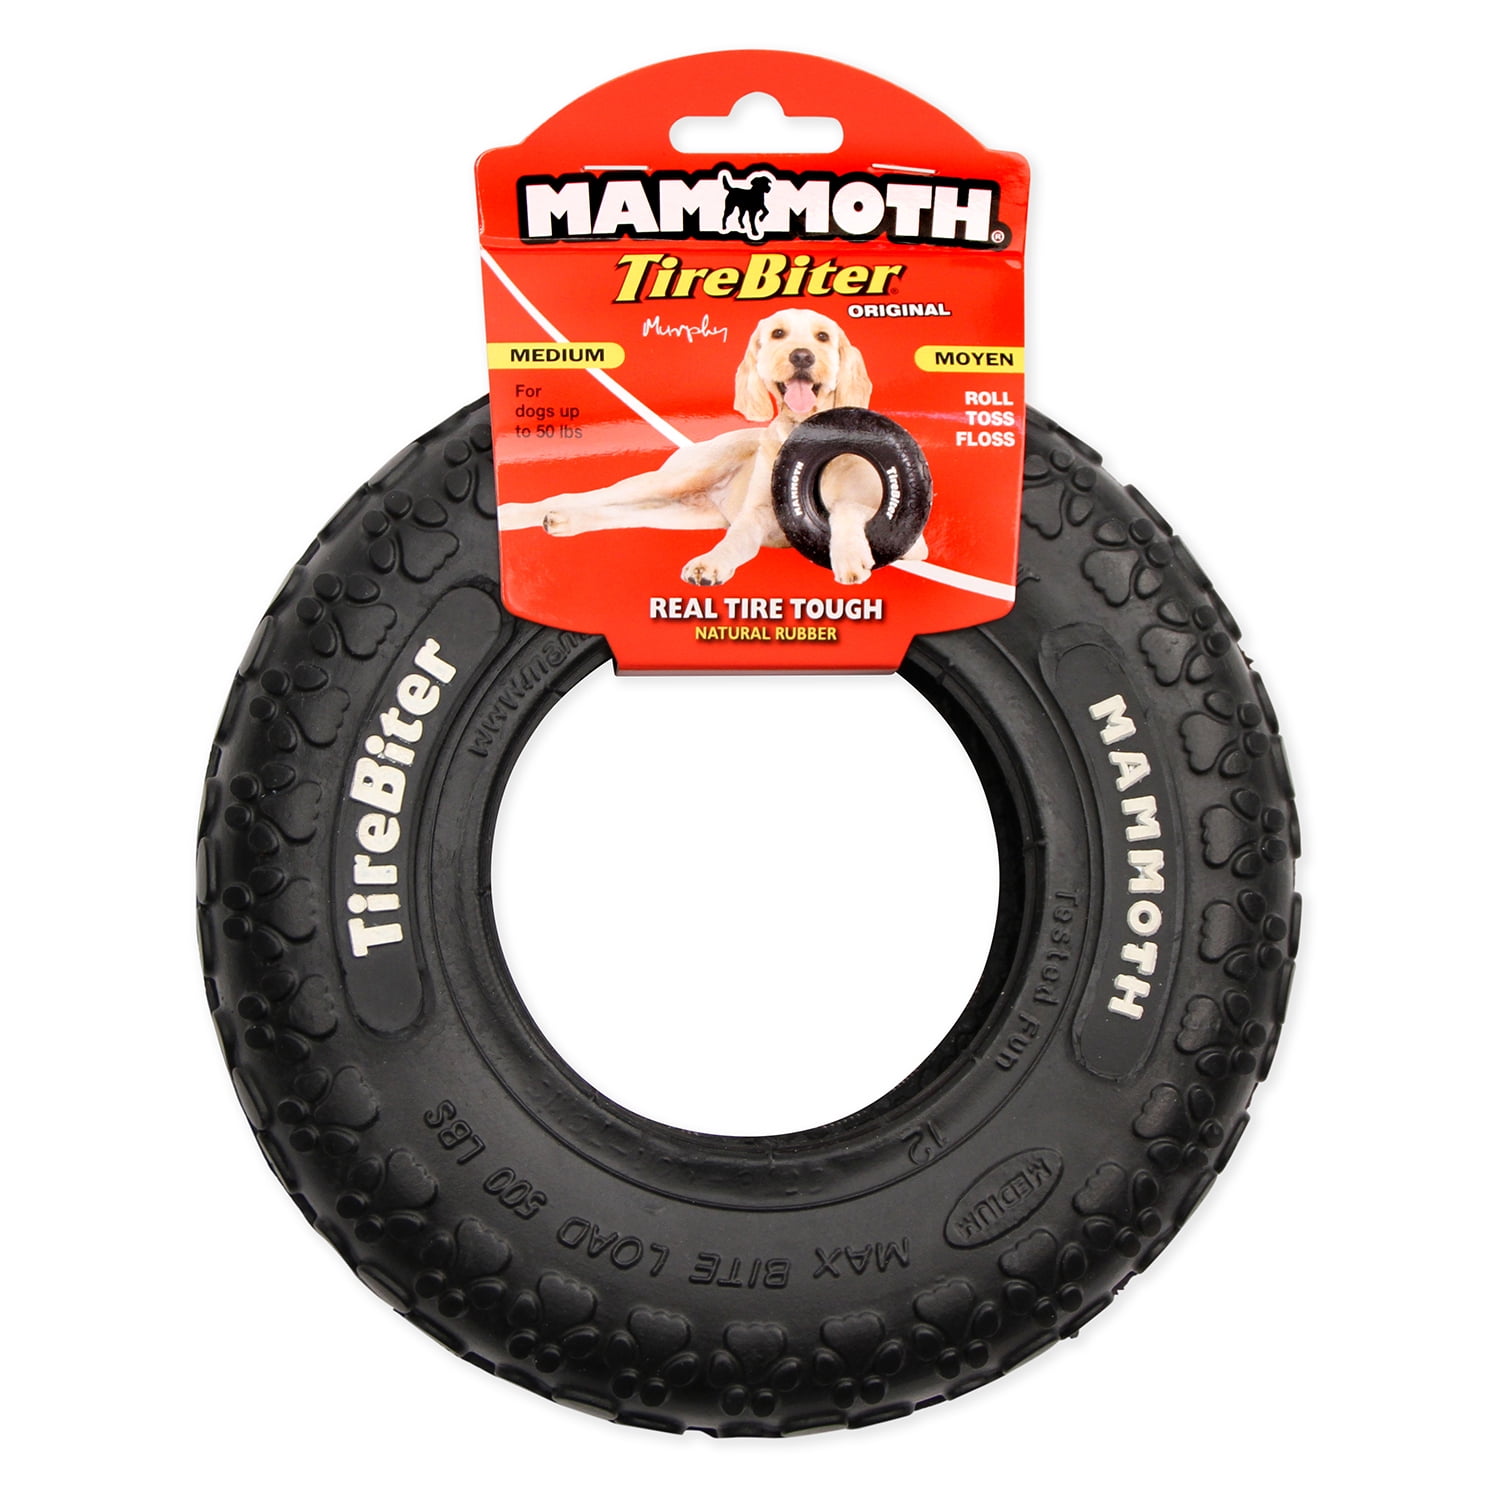 Mammoth TireBiter Rubber Tire Dog Toy, Medium, 8"